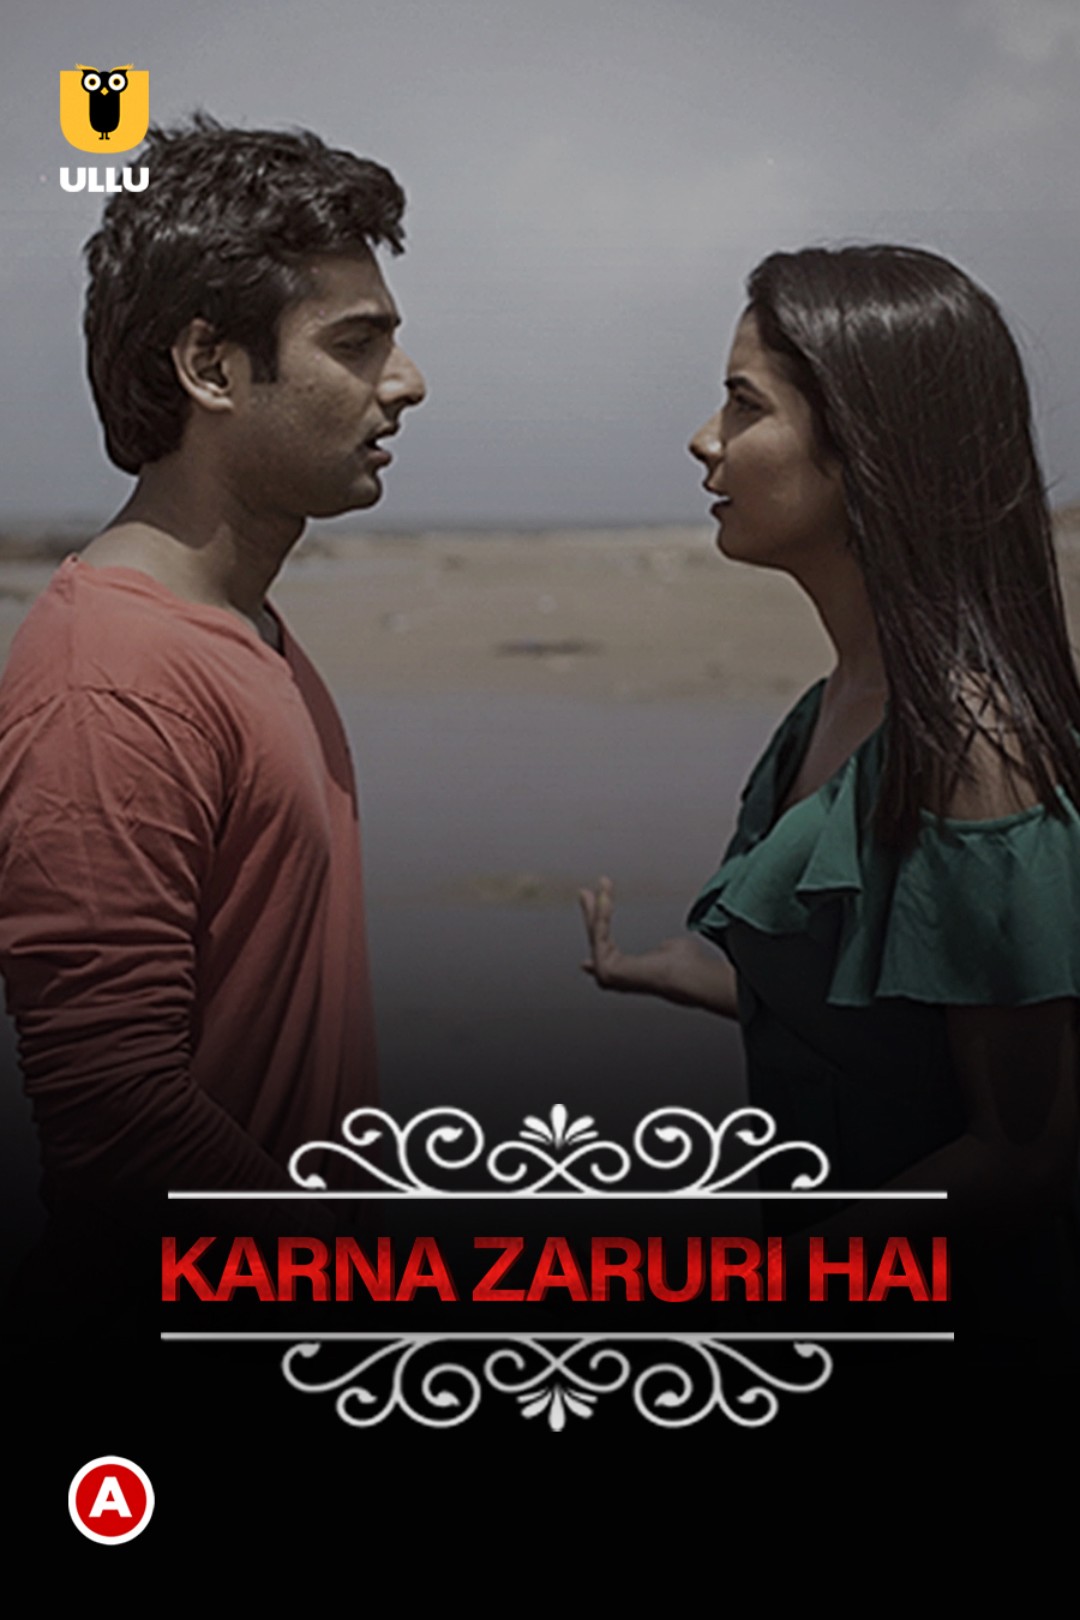 18+ Karna Zarori Hai (Charmsukh) 2019 Ullu Hindi Web Series 720p HDRip Download